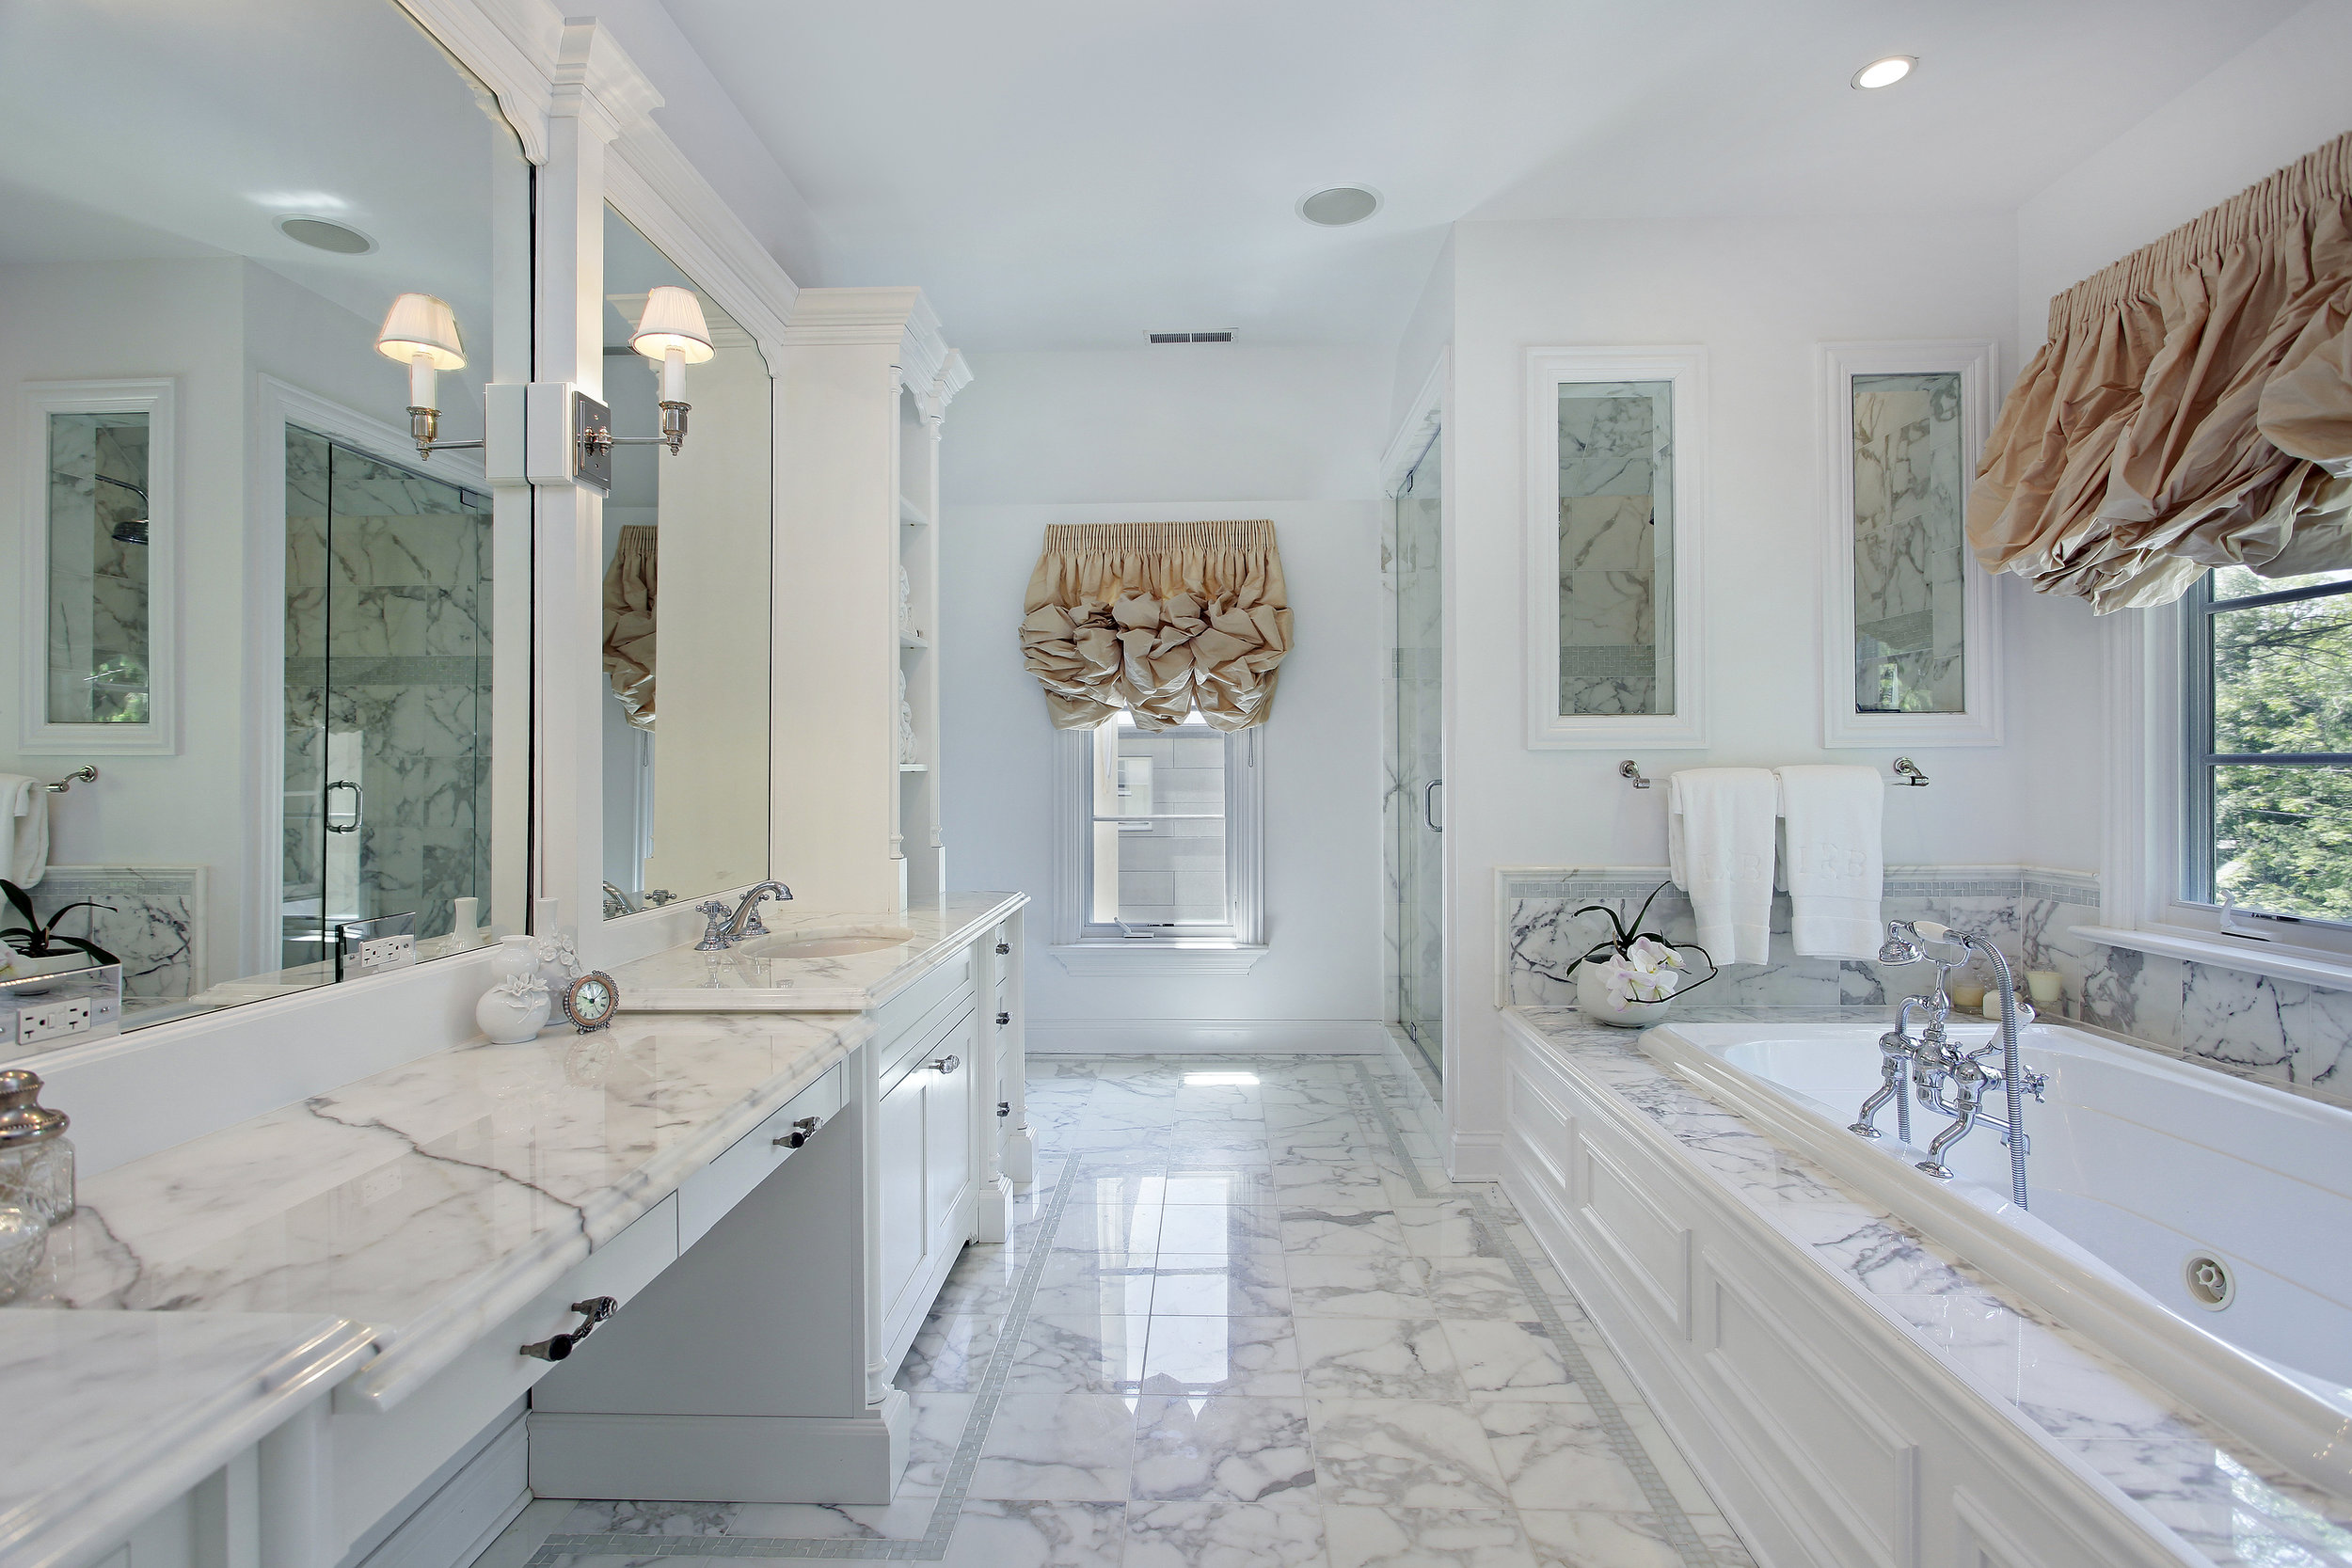 bigstock-Master-bath-in-luxury-home-wit-75635494.jpg